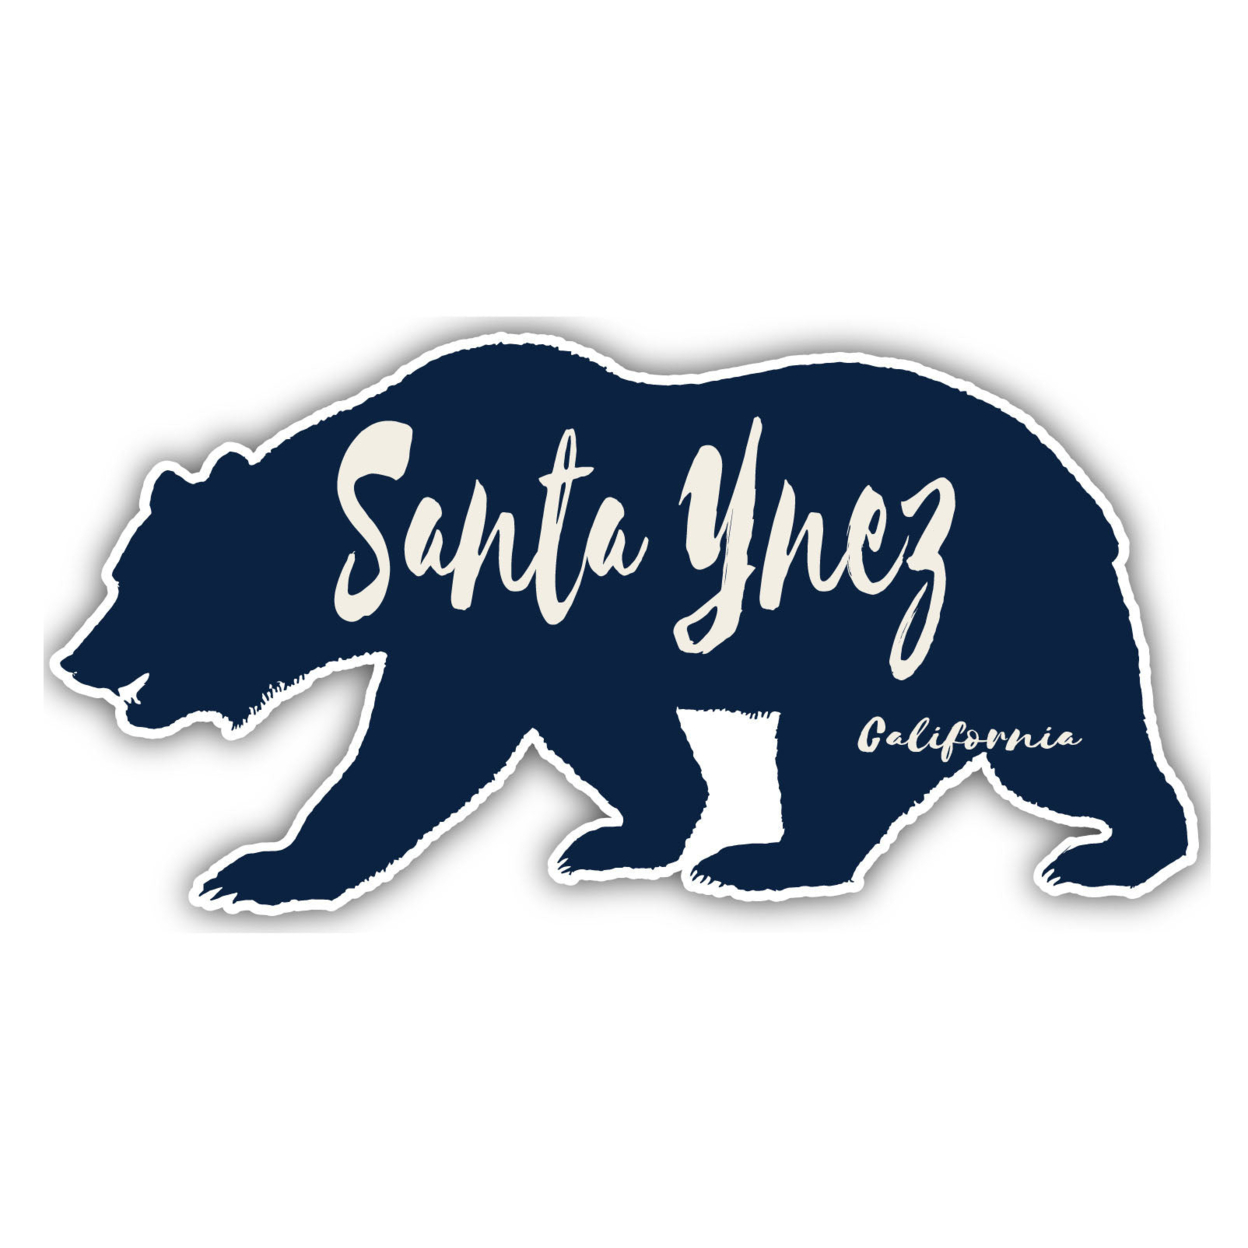 Santa Ynez California Souvenir Decorative Stickers (Choose Theme And Size) - Single Unit, 4-Inch, Bear